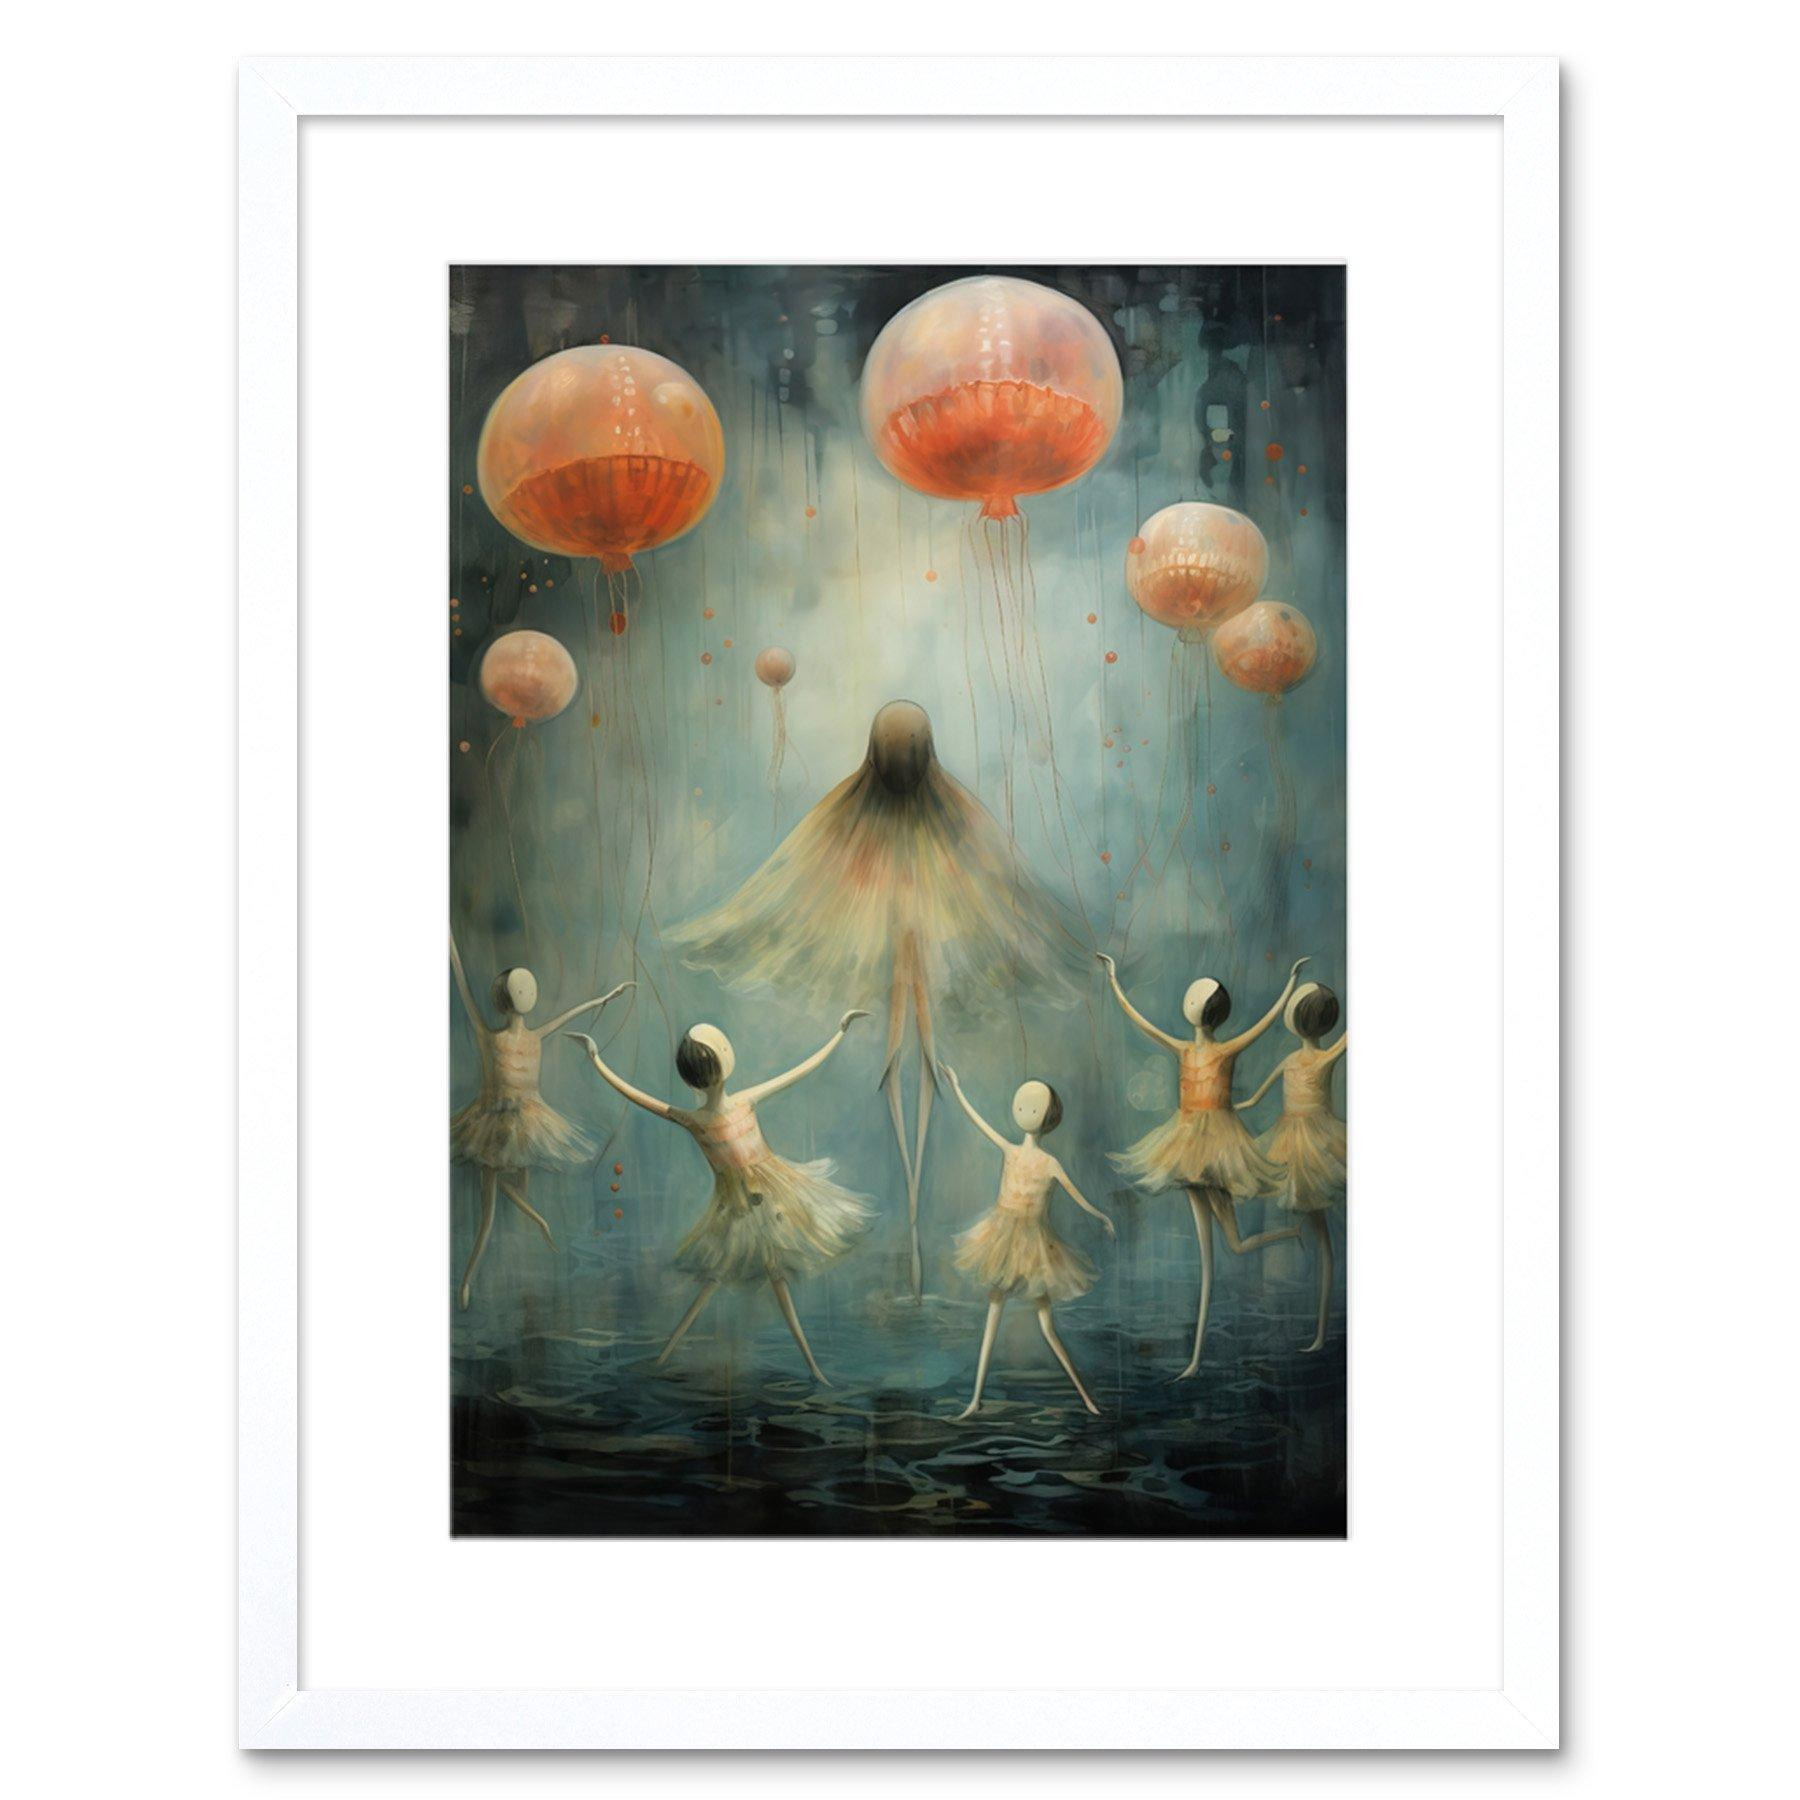 Wall Art Print The Jellyfish Ballet Whimsical Surreal Underwater Dance Artwork Framed 9X7 Inch - image 1